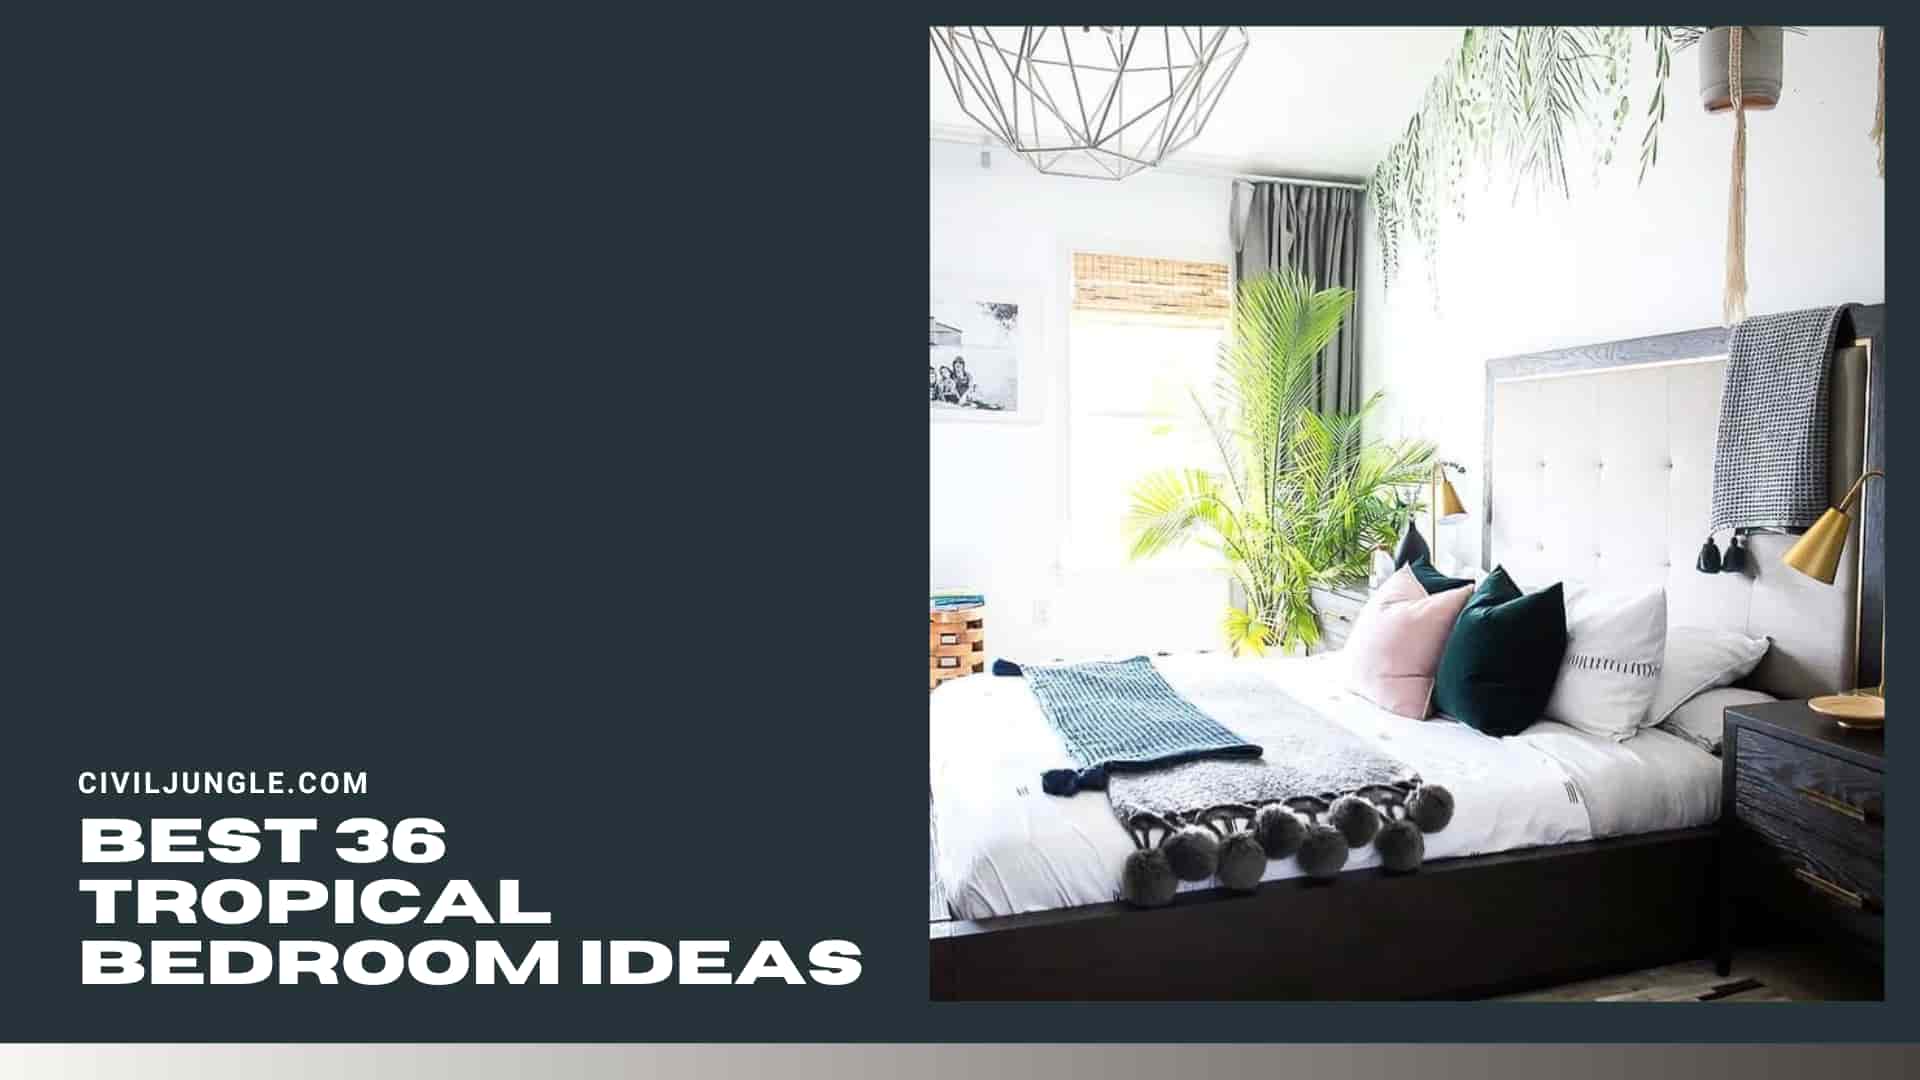 Best 36 Tropical Bedroom Ideas